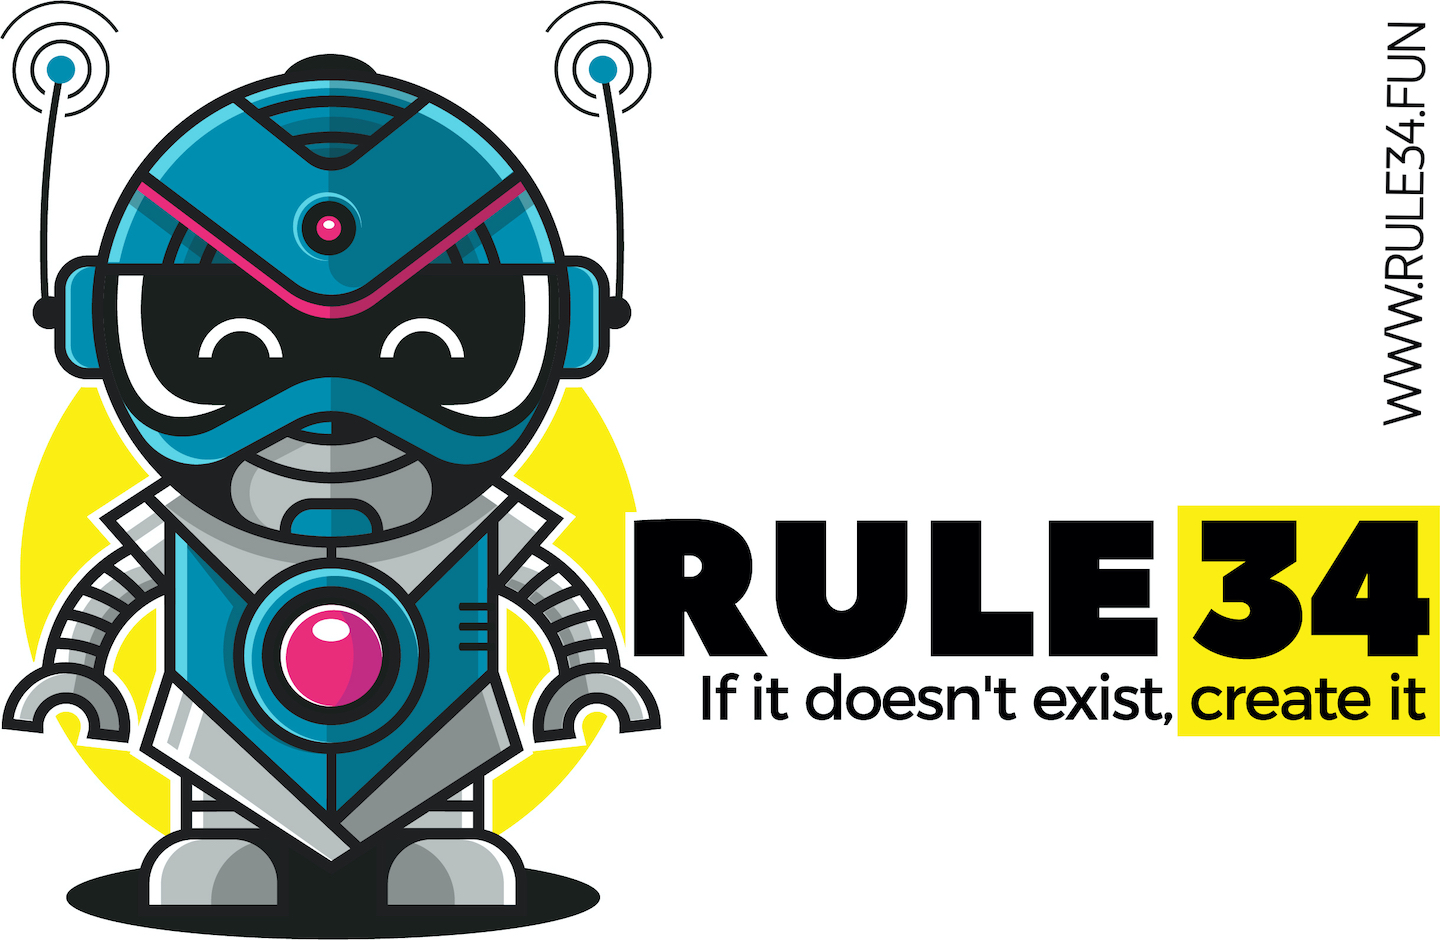 The rule 34 website